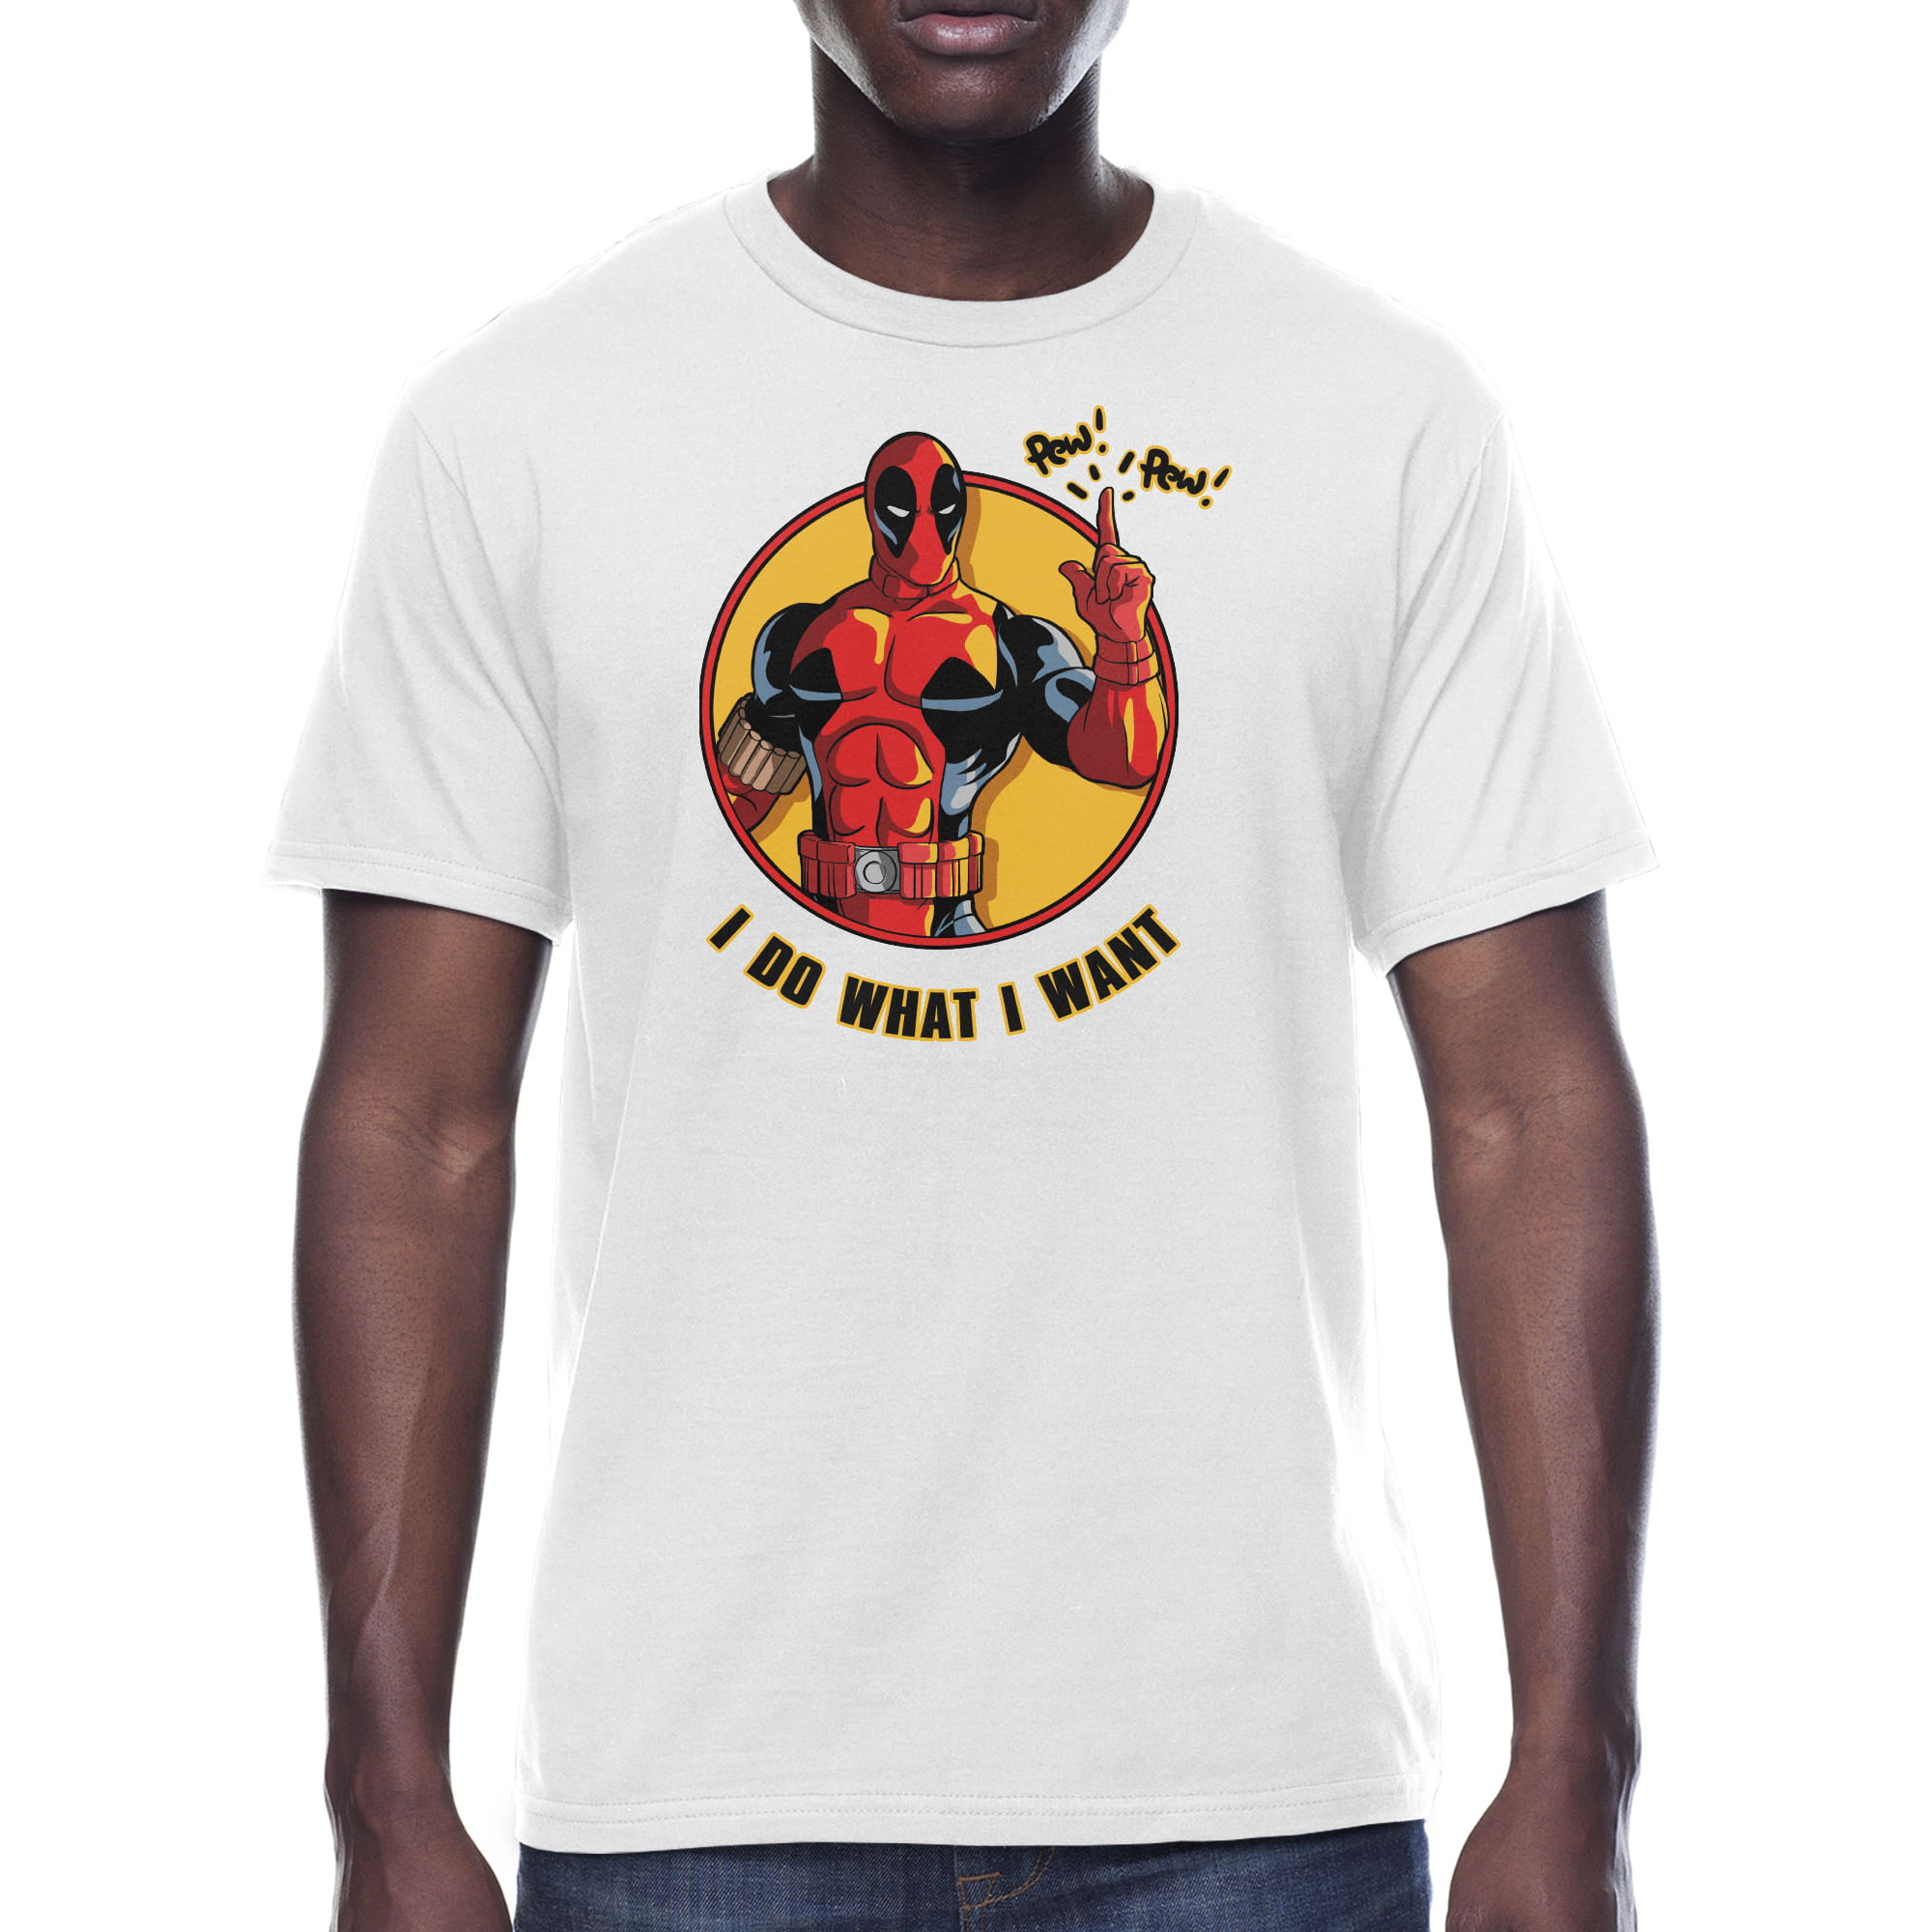 Marvel Deadpool Graphic Tee Shirt Do What I Want, Sizes S-3XL, Mens T- Shirts - Walmart.com